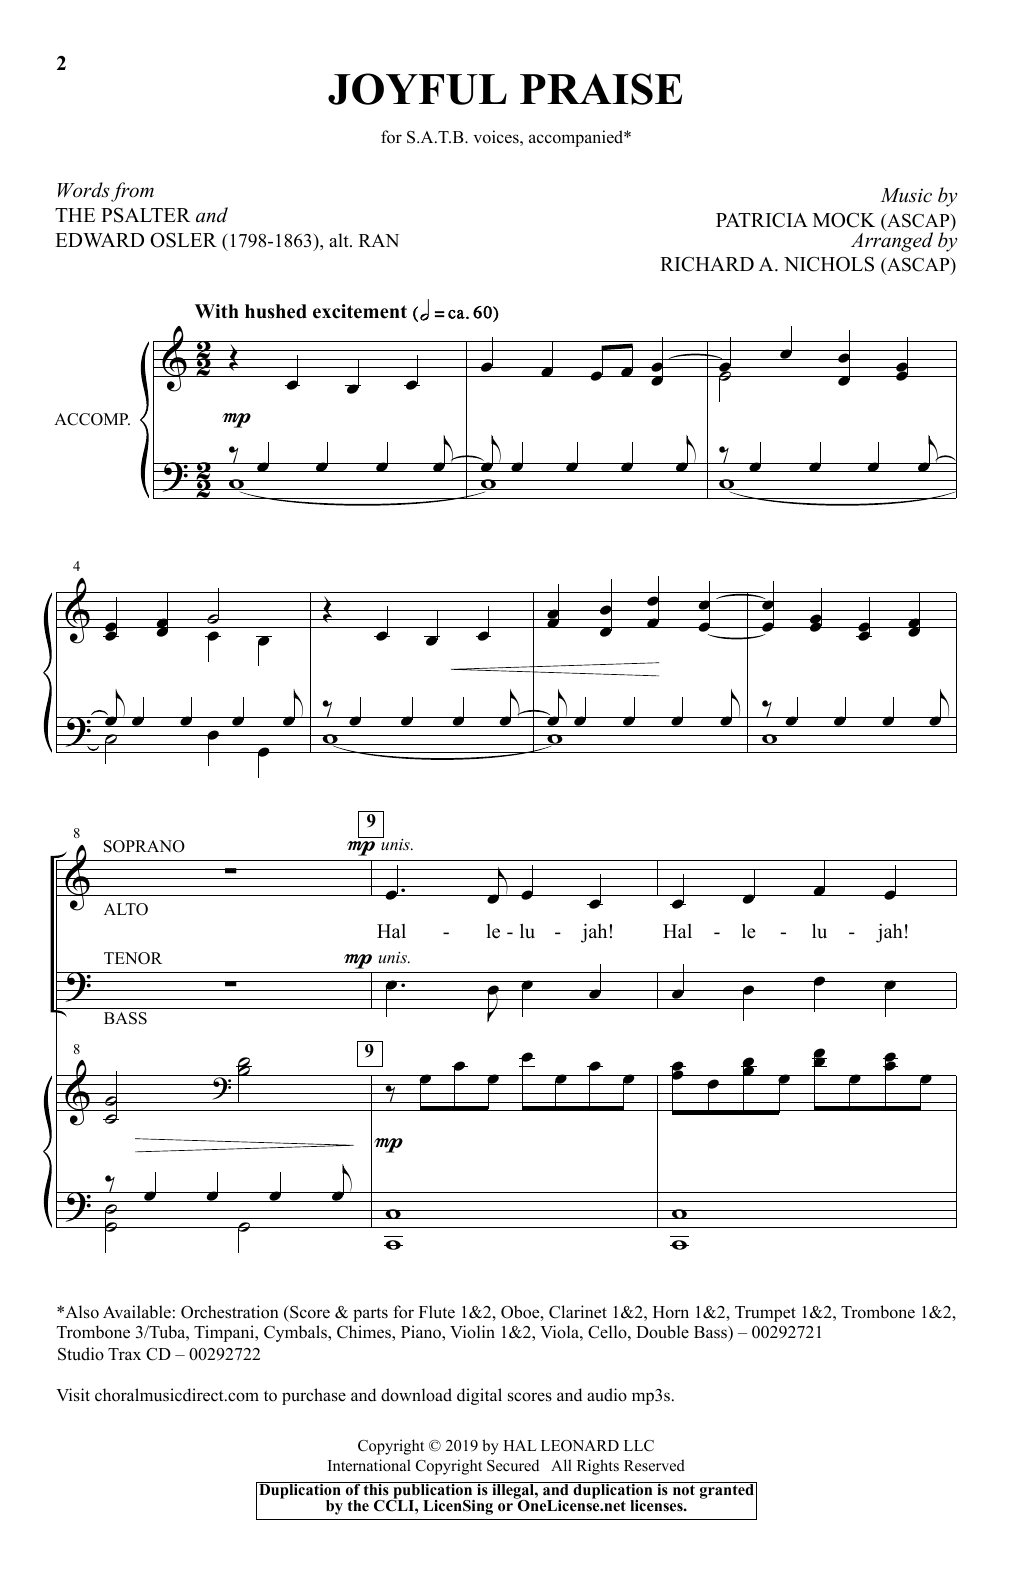 Download Richard A. Nichols Joyful Praise Sheet Music and learn how to play SATB Choir PDF digital score in minutes